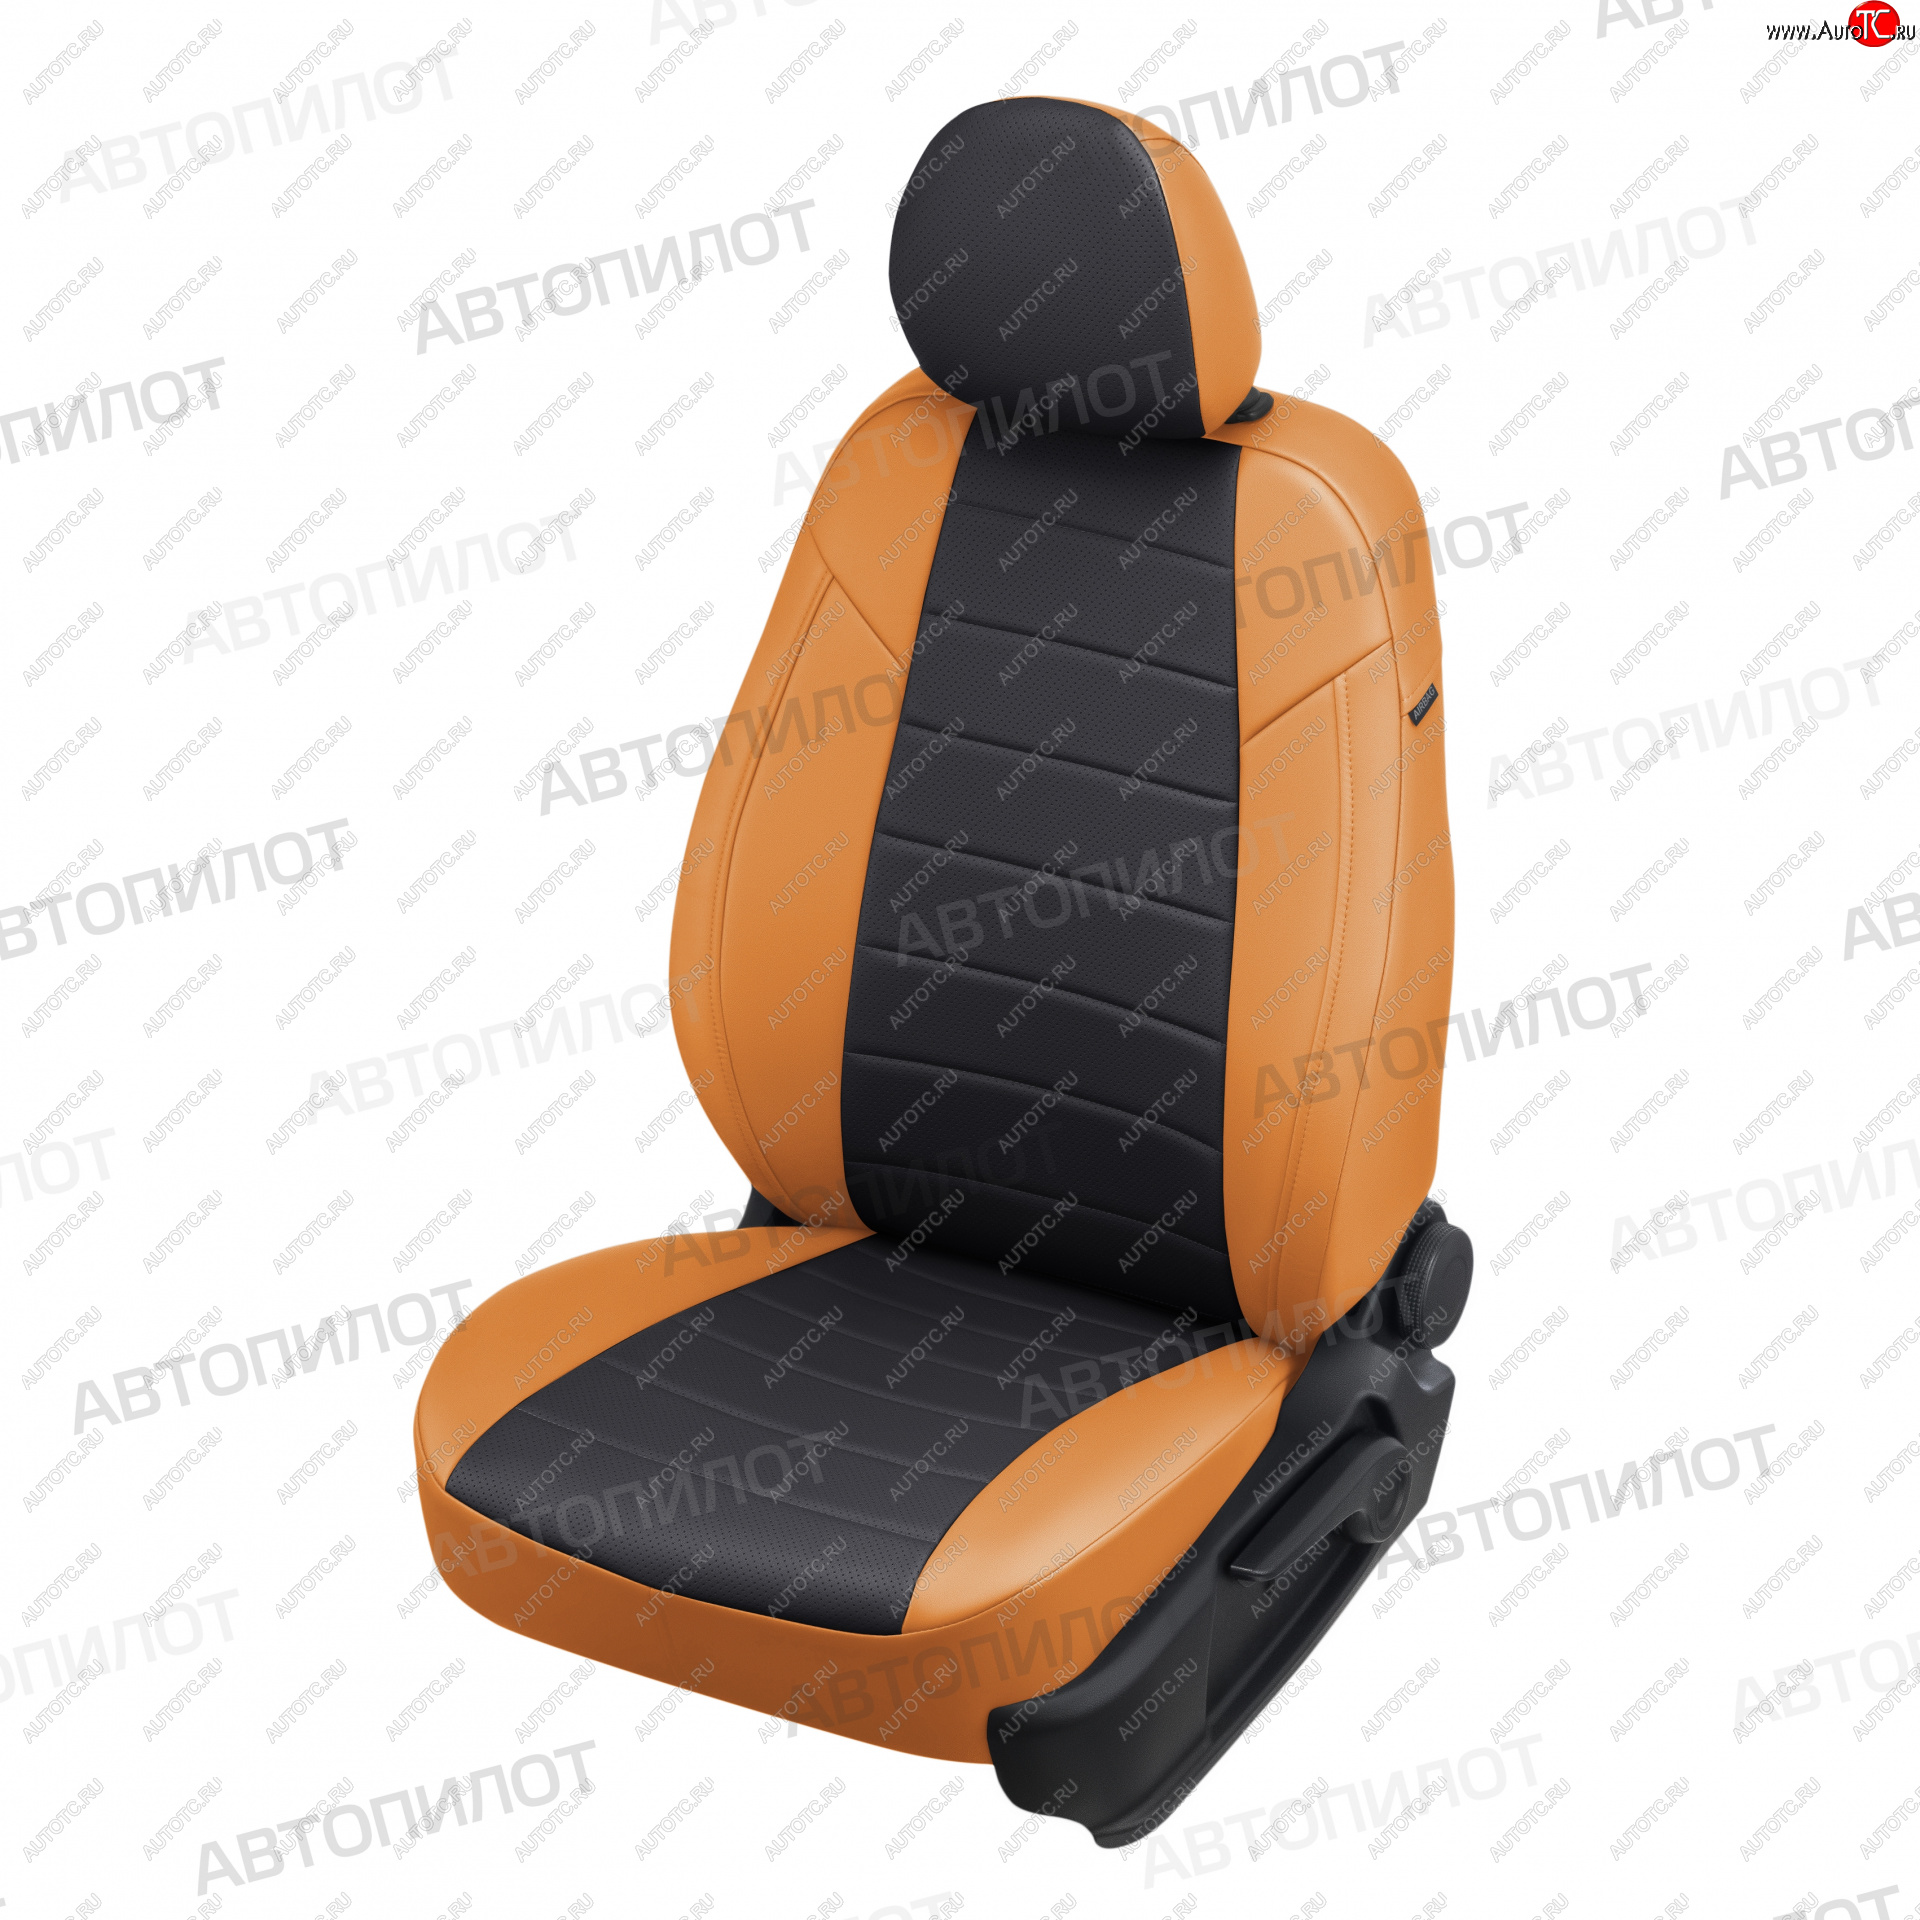 13 449 р. Чехлы сидений (экокожа) Автопилот  Honda CR-V  RD4,RD5,RD6,RD7,RD9  (2001-2006) (оранж/черный)